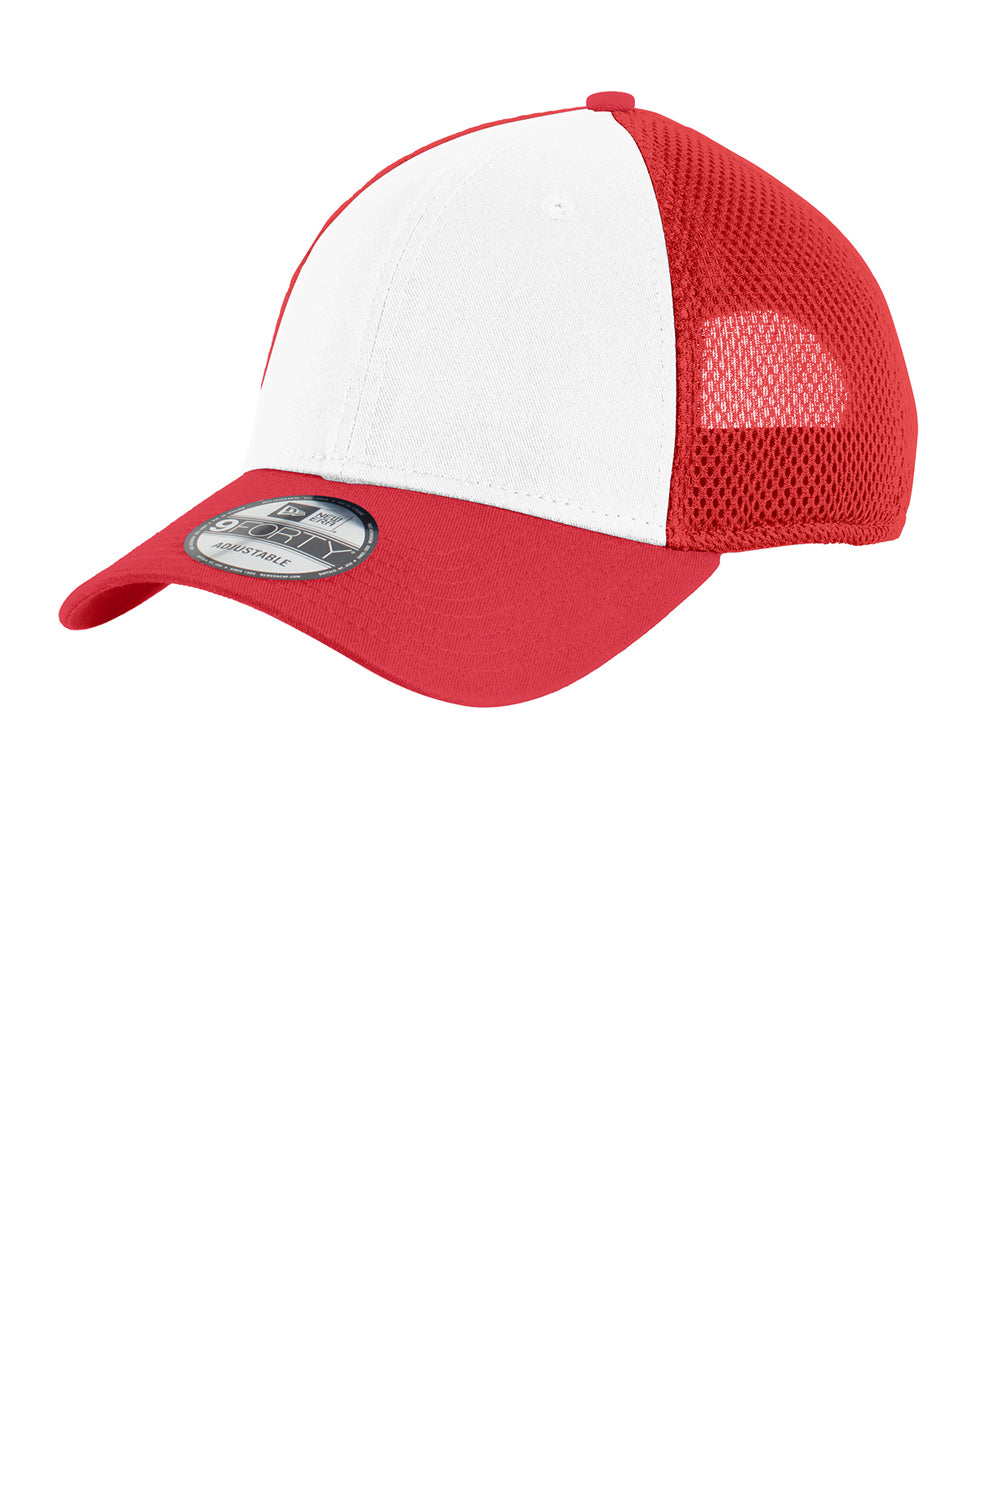 New Era NE204 Mens Adjustable Hat White/Red Front